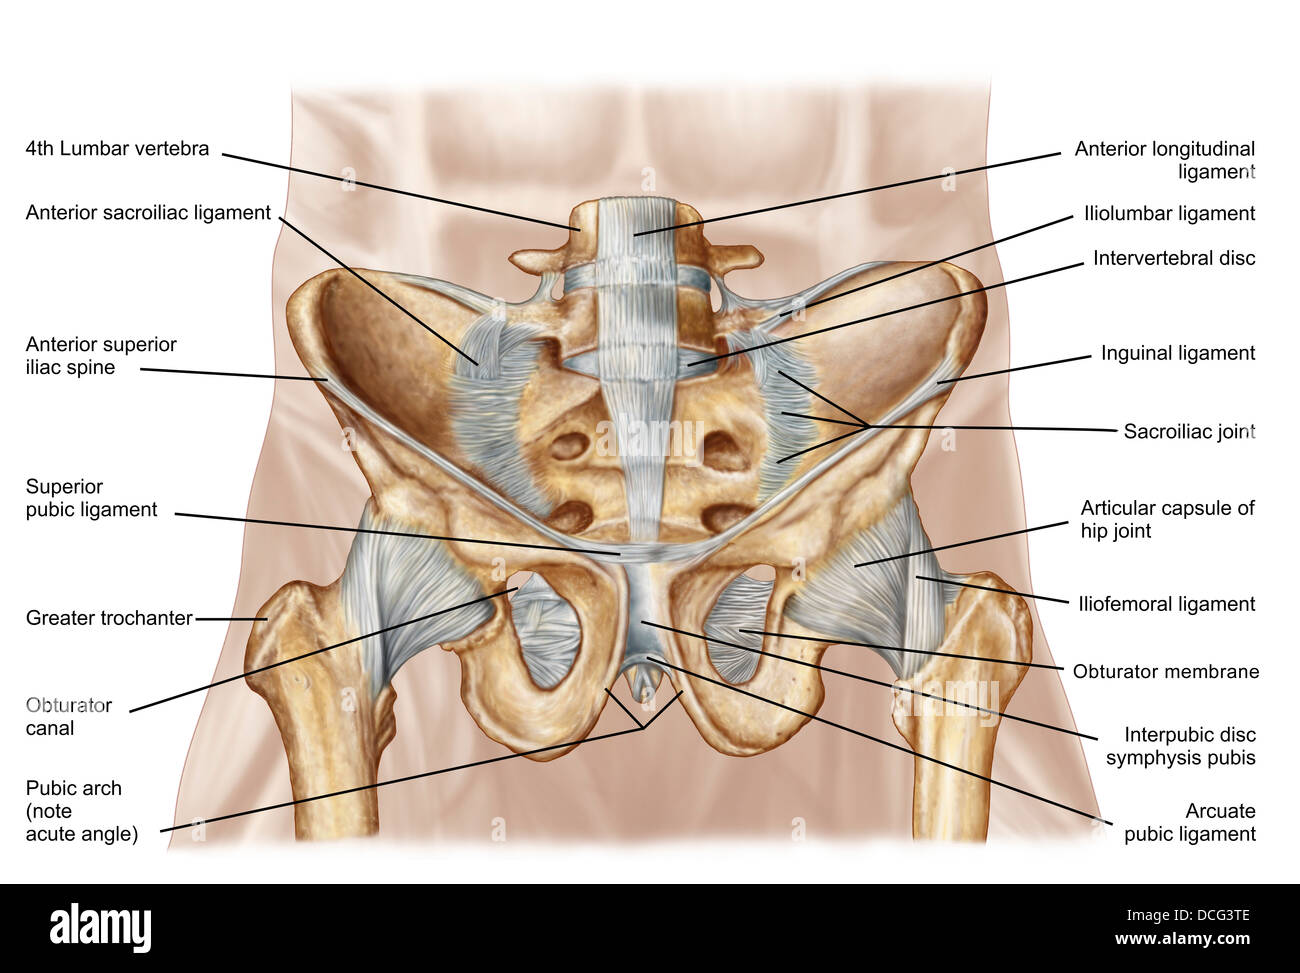 Anatomy of human pelvic bone and ligaments. Stock Photo